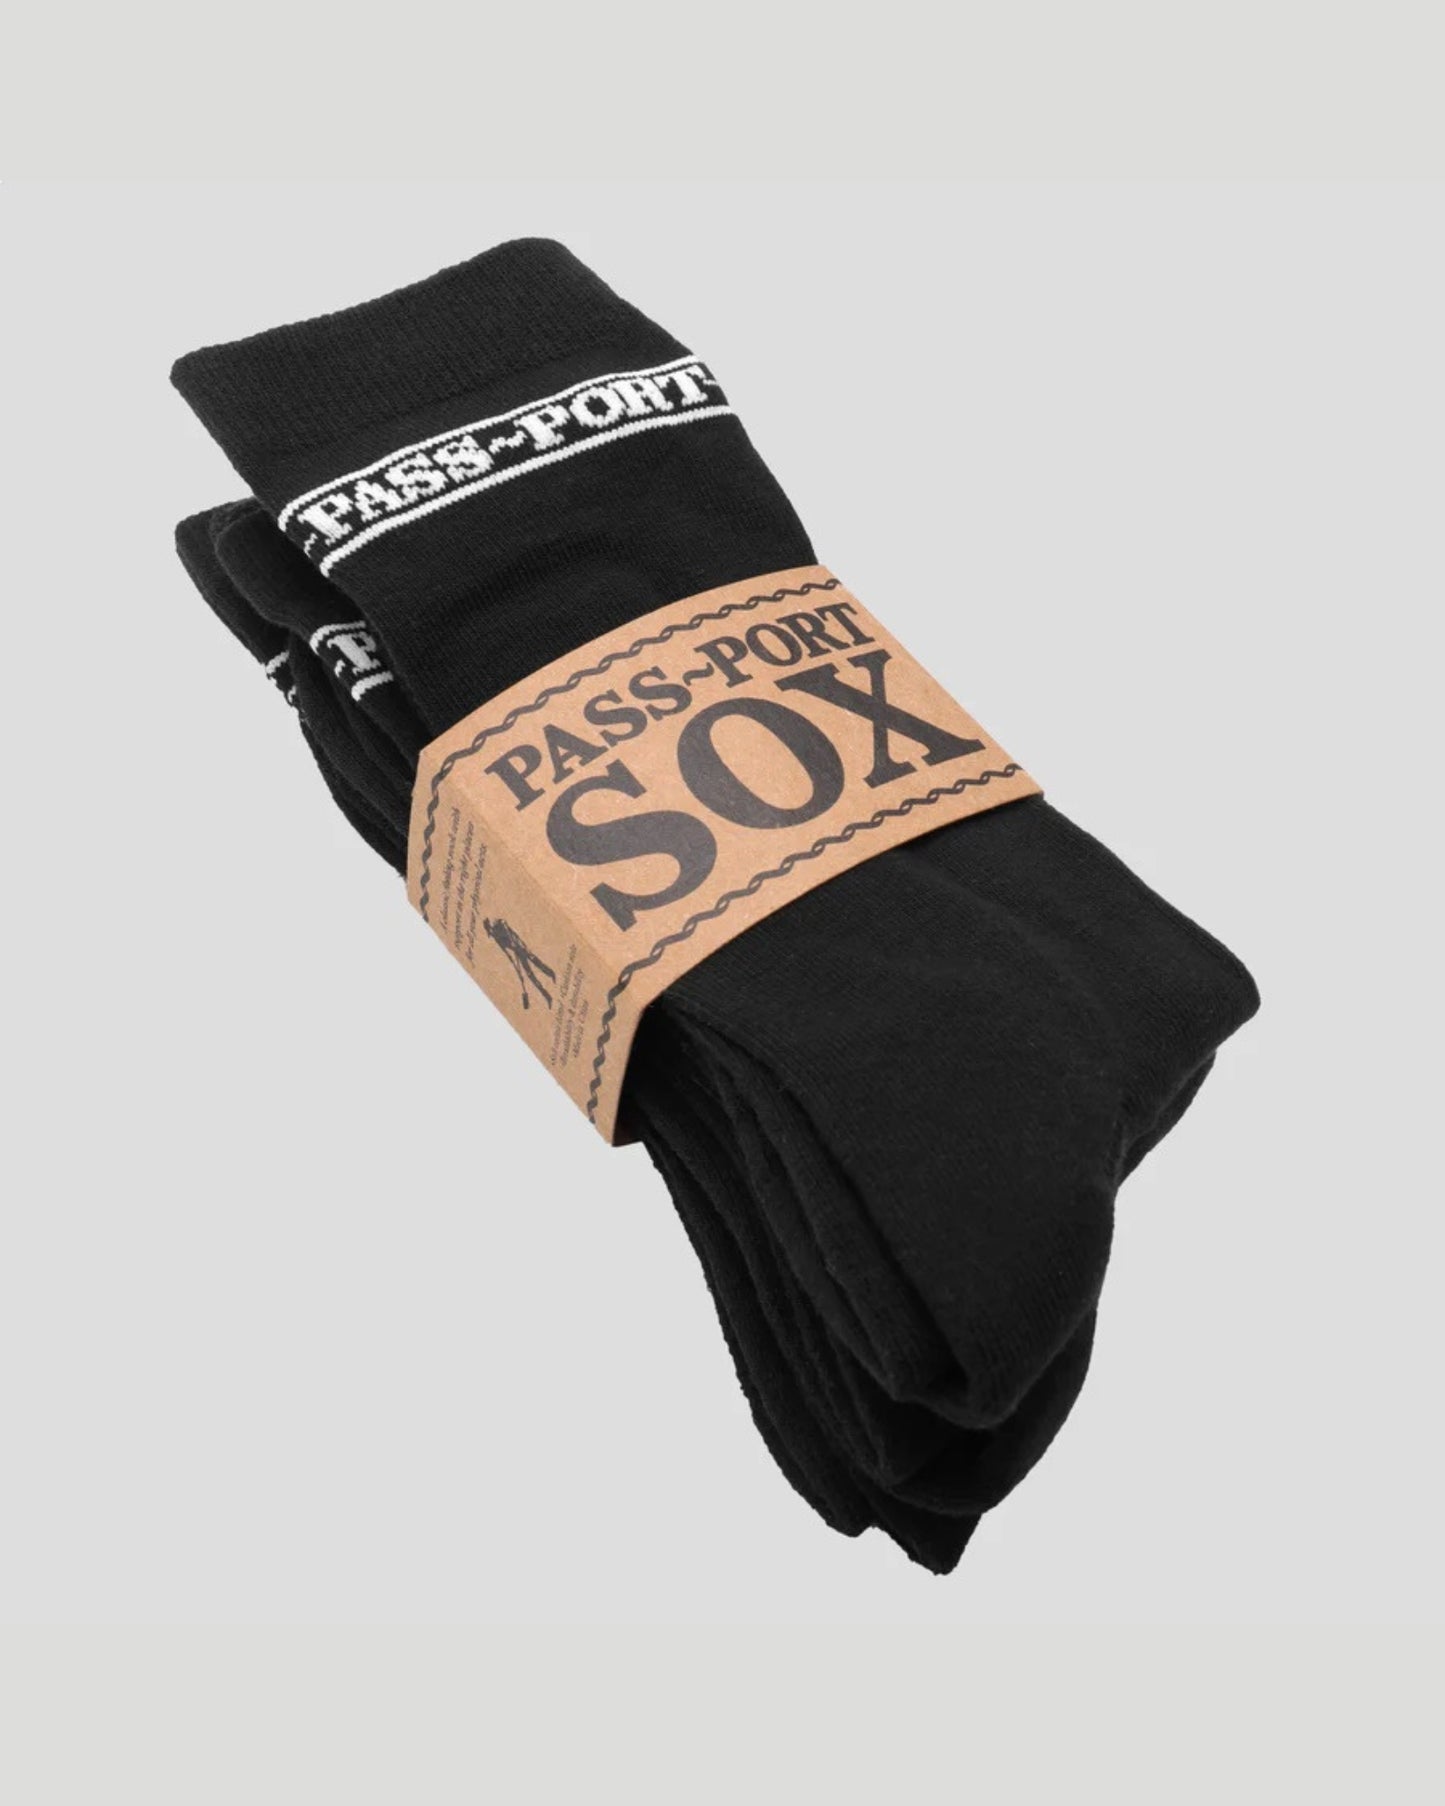 PASSPORT Hi Sox Set 3 pairs - All Black